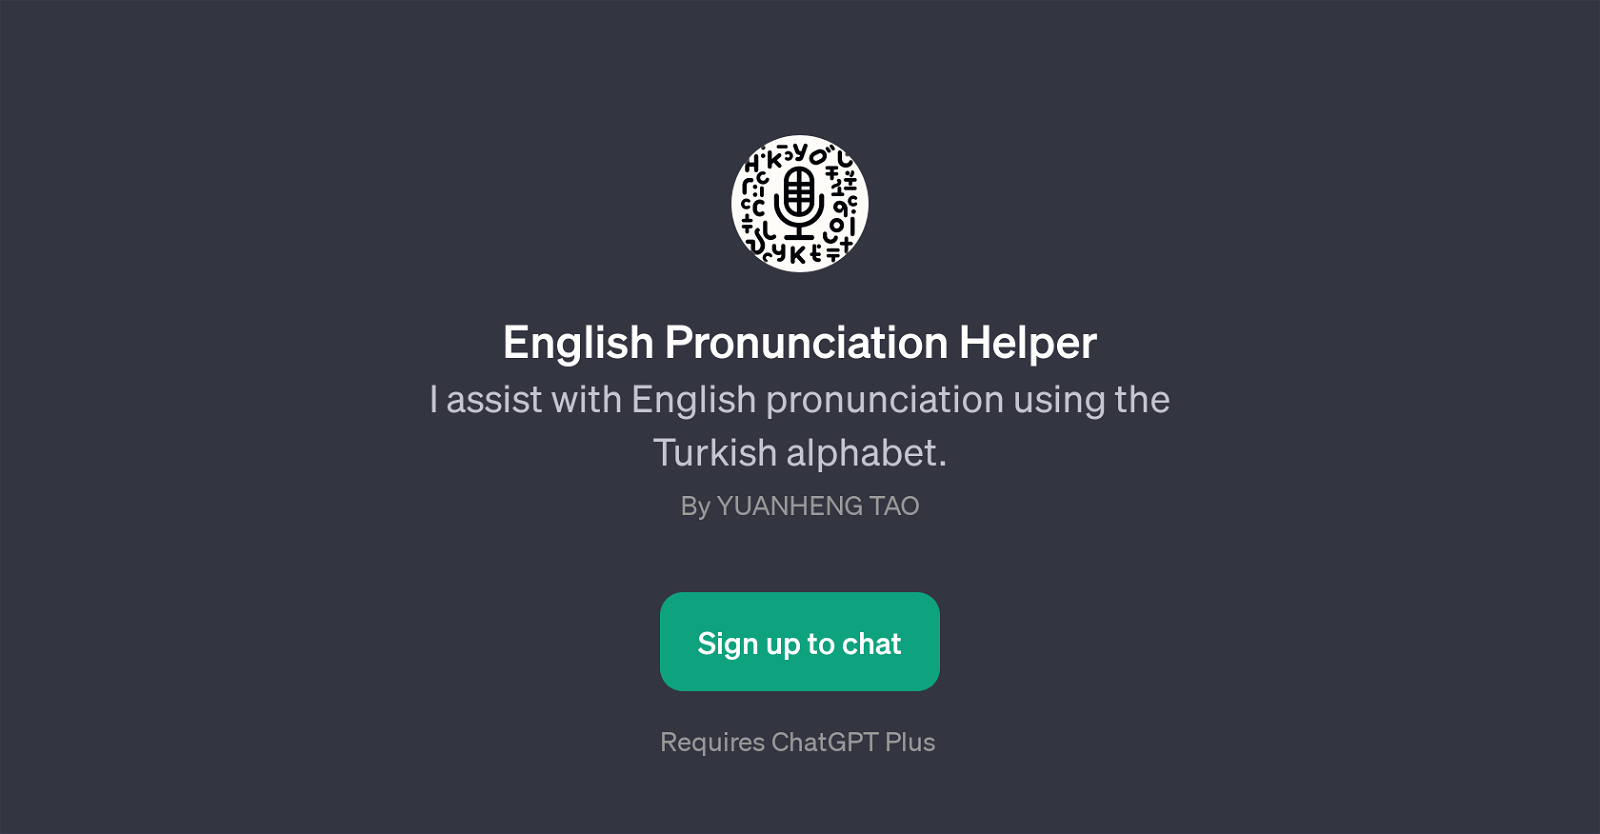 English Pronunciation Helper website